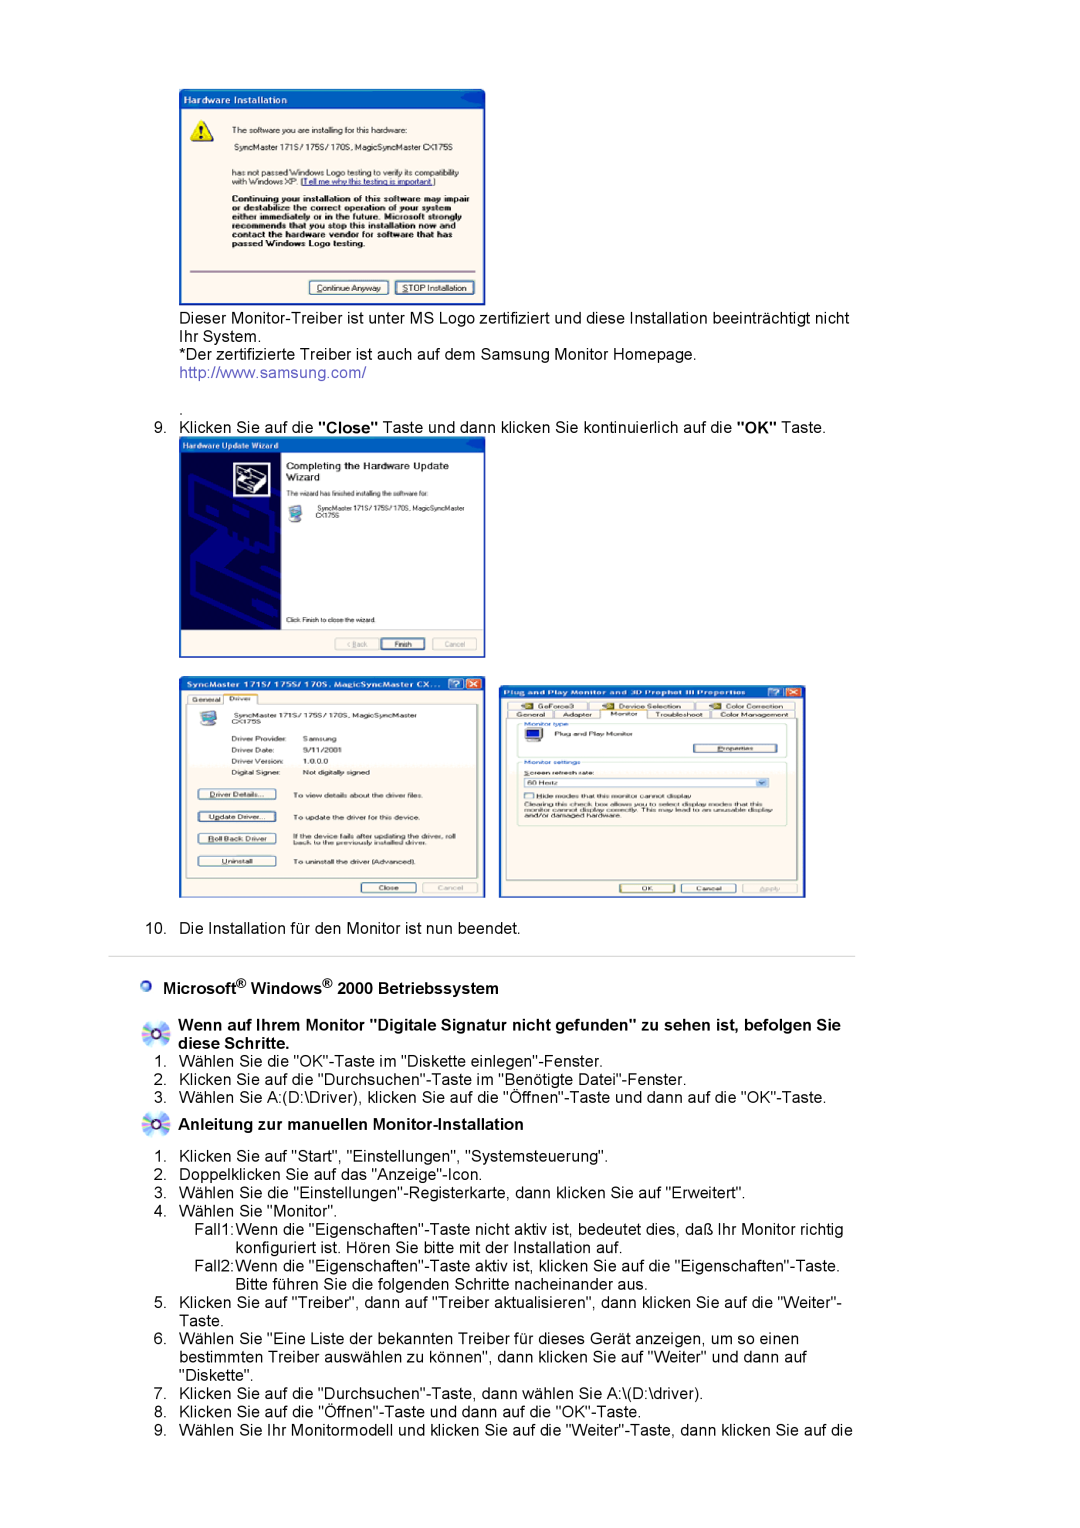 Samsung MJ19MSTSQ/EDC, LS17MJSTSE/EDC Microsoft Windows 2000 Betriebssystem, Anleitung zur manuellen Monitor-Installation 